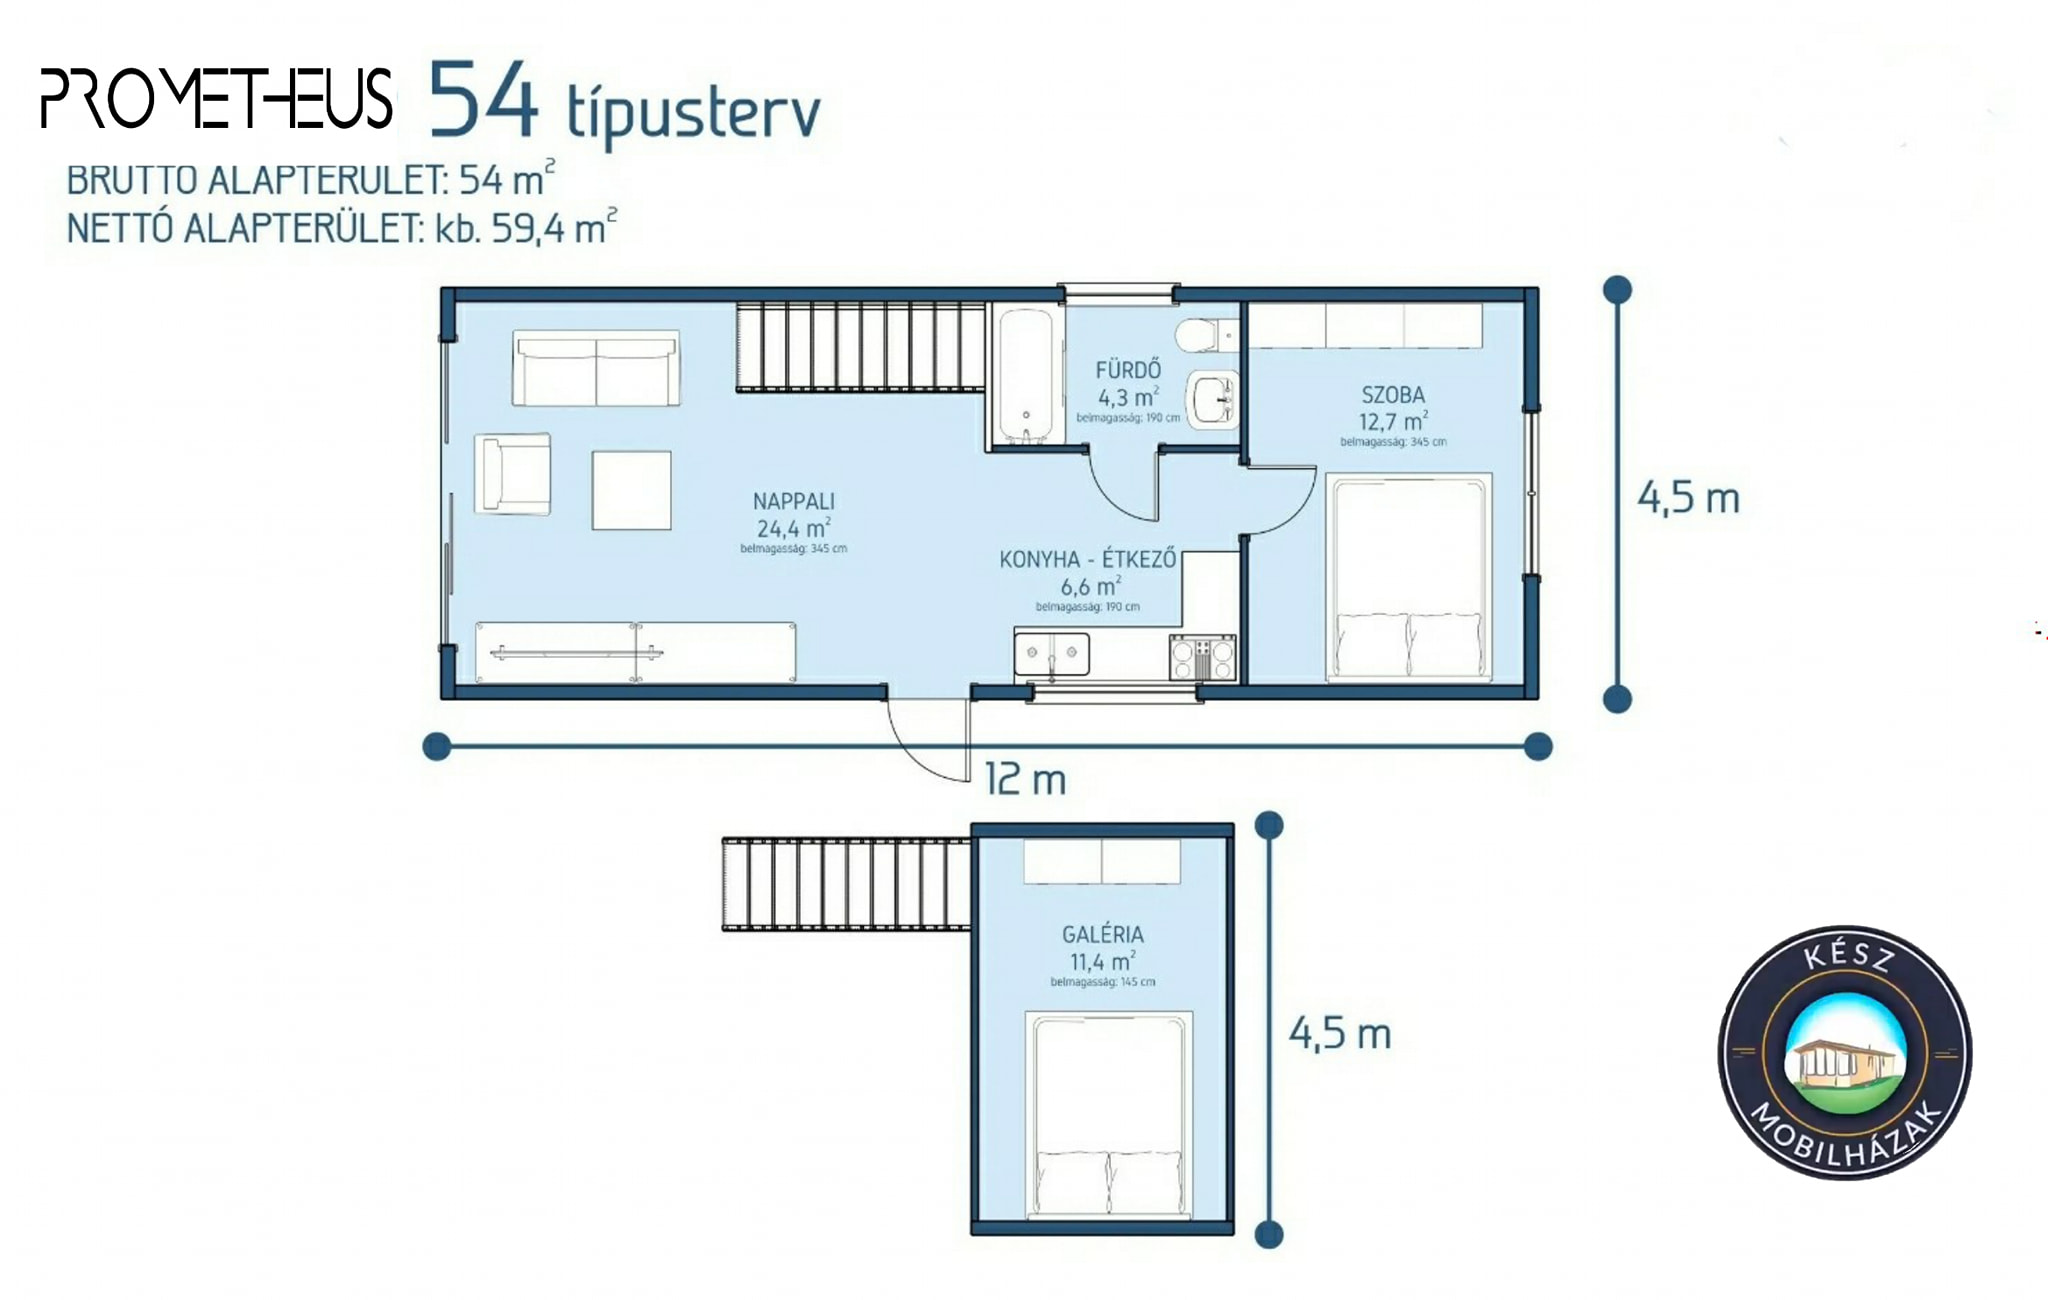 Promethes 54 m²-es modul mobilház alaprajza